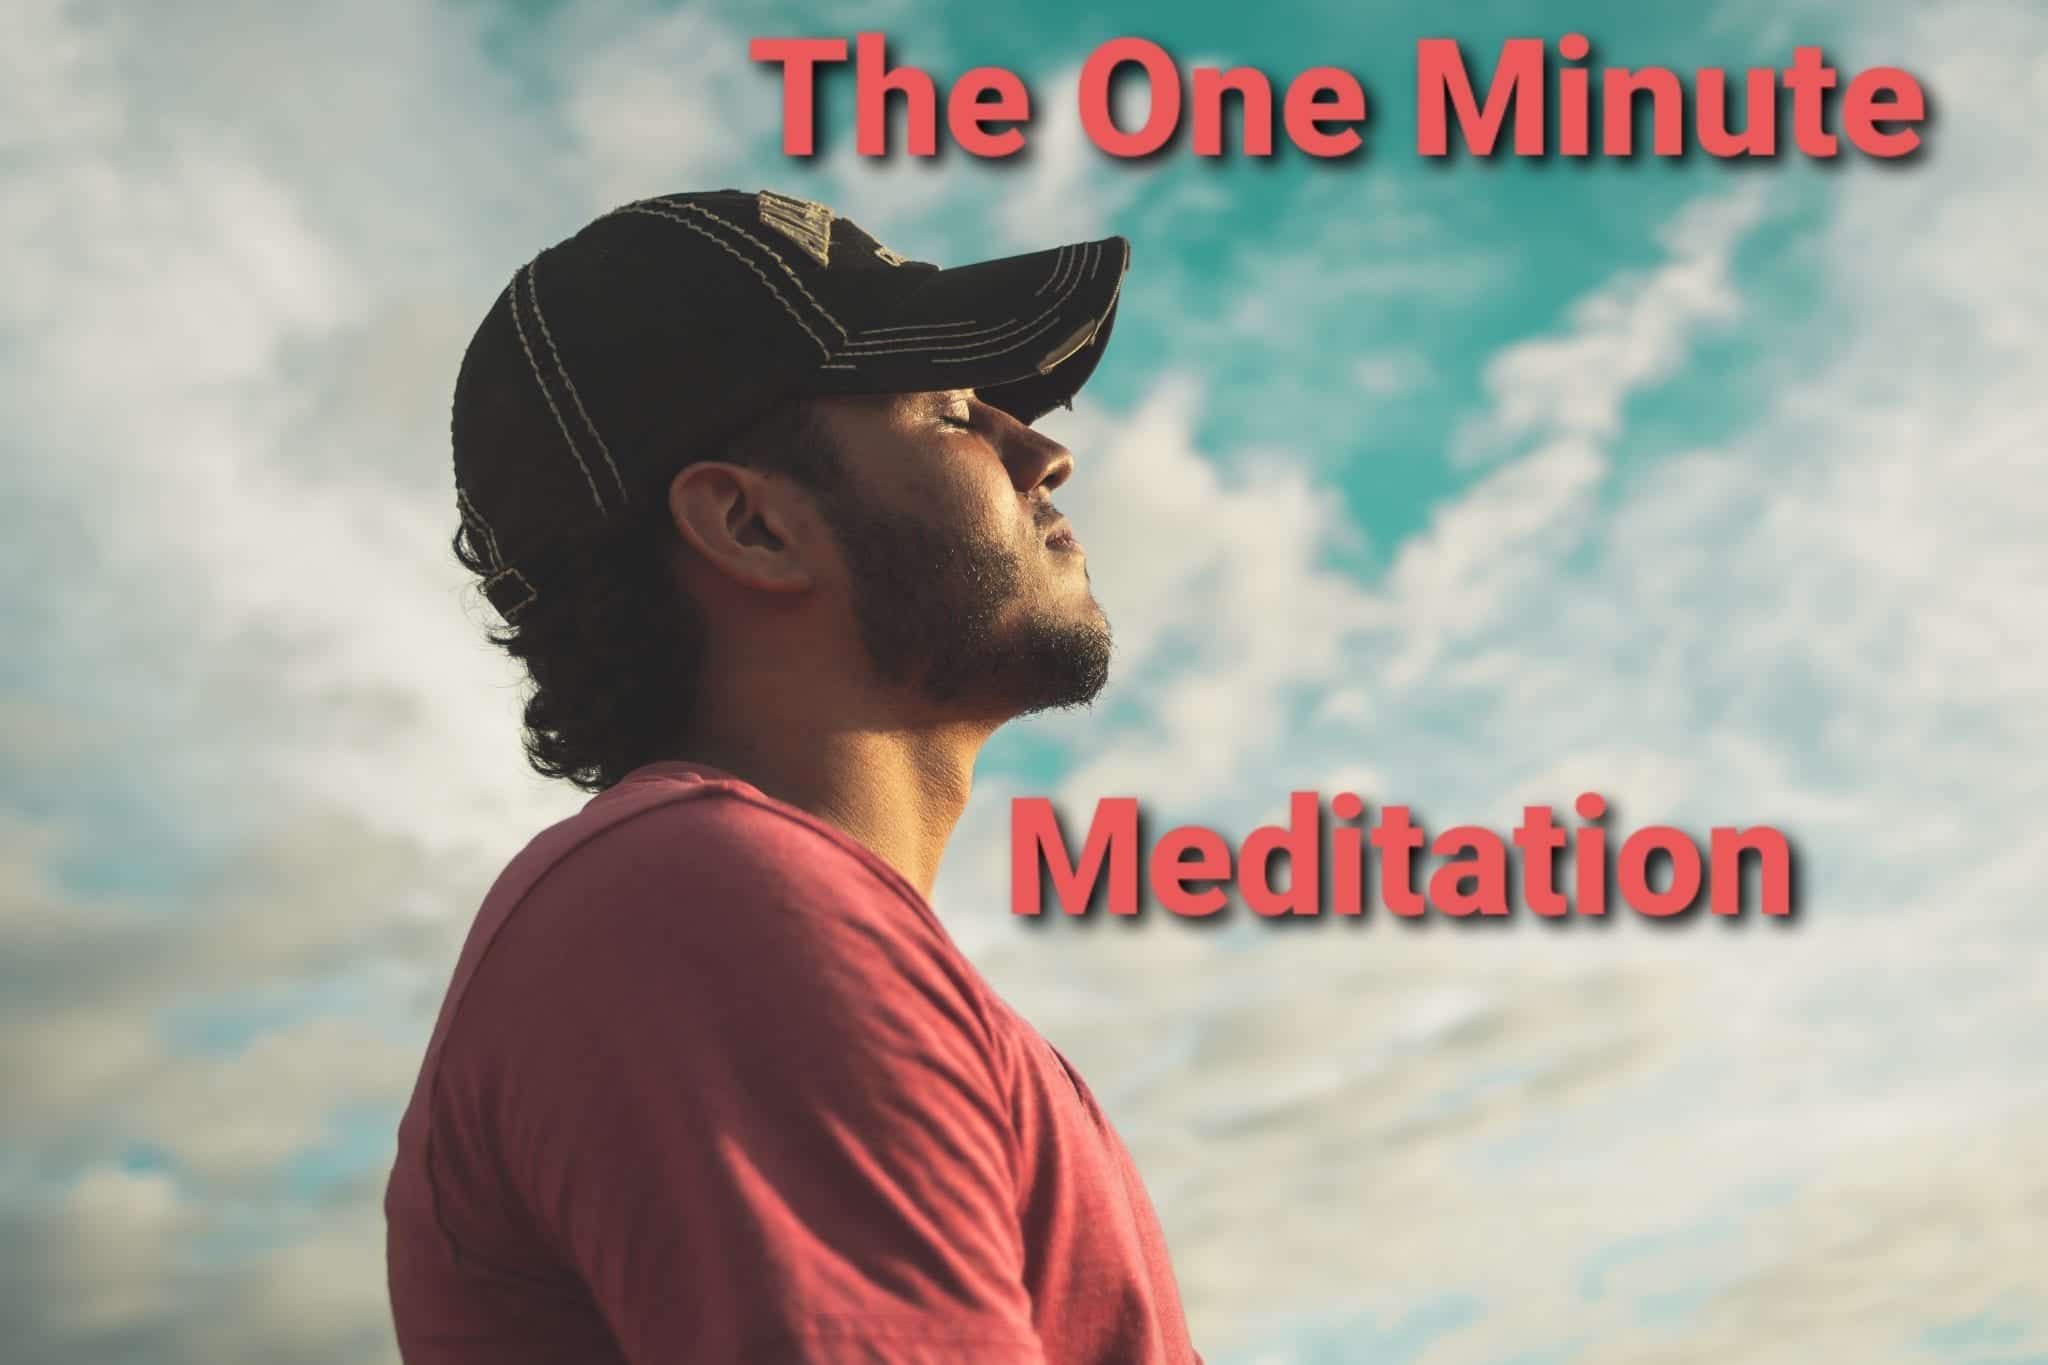 One moment meditation by martin boroson 1